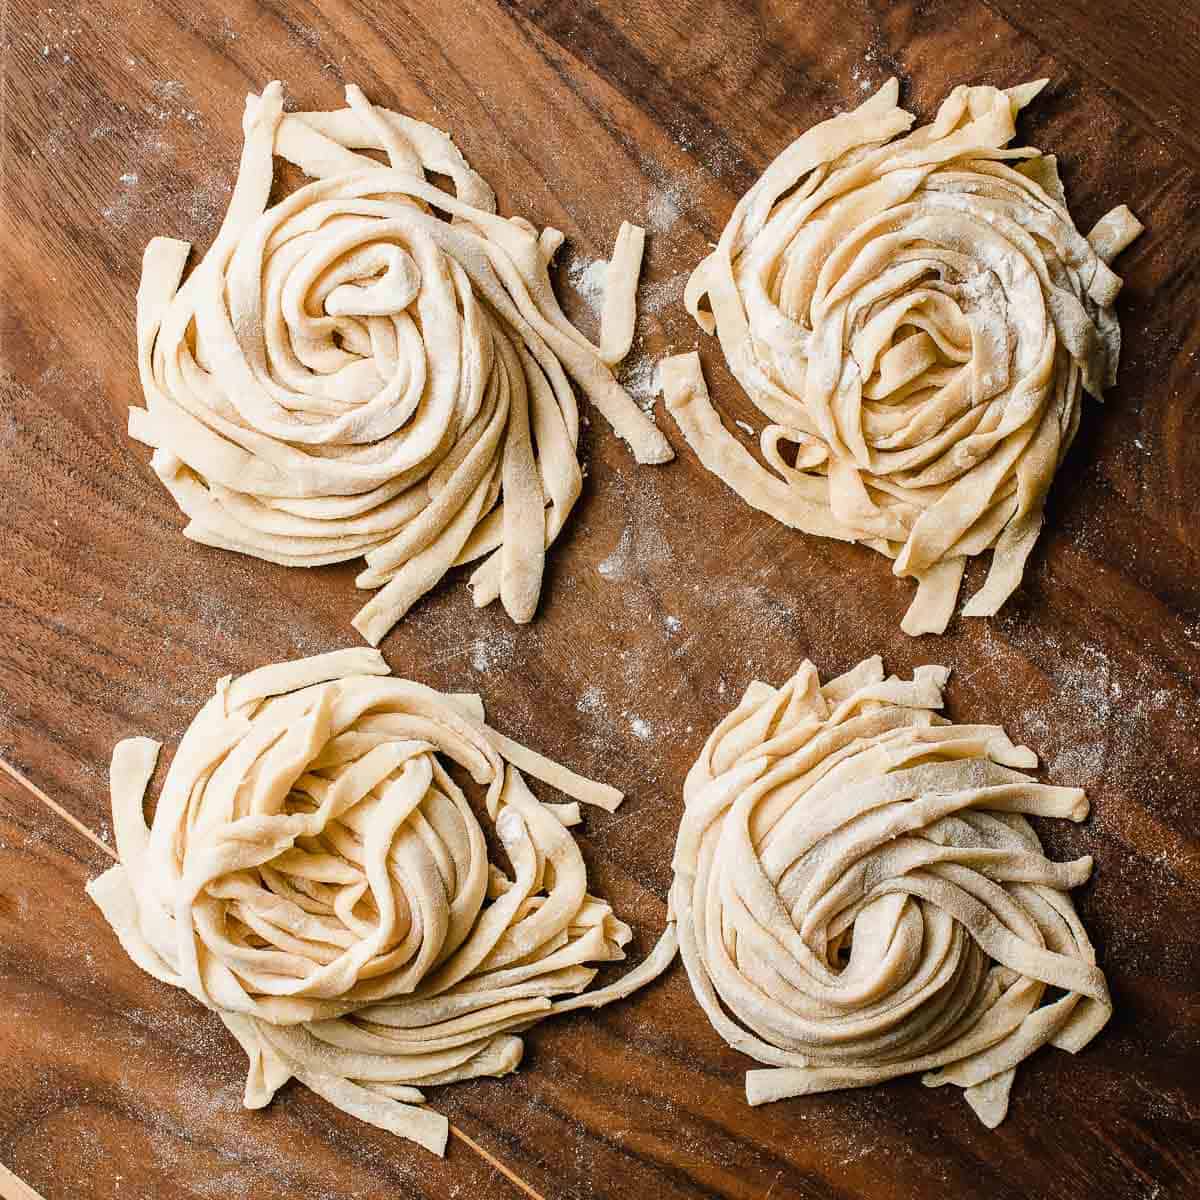 Four piles of fresh sourdough pasta on a cutting board.